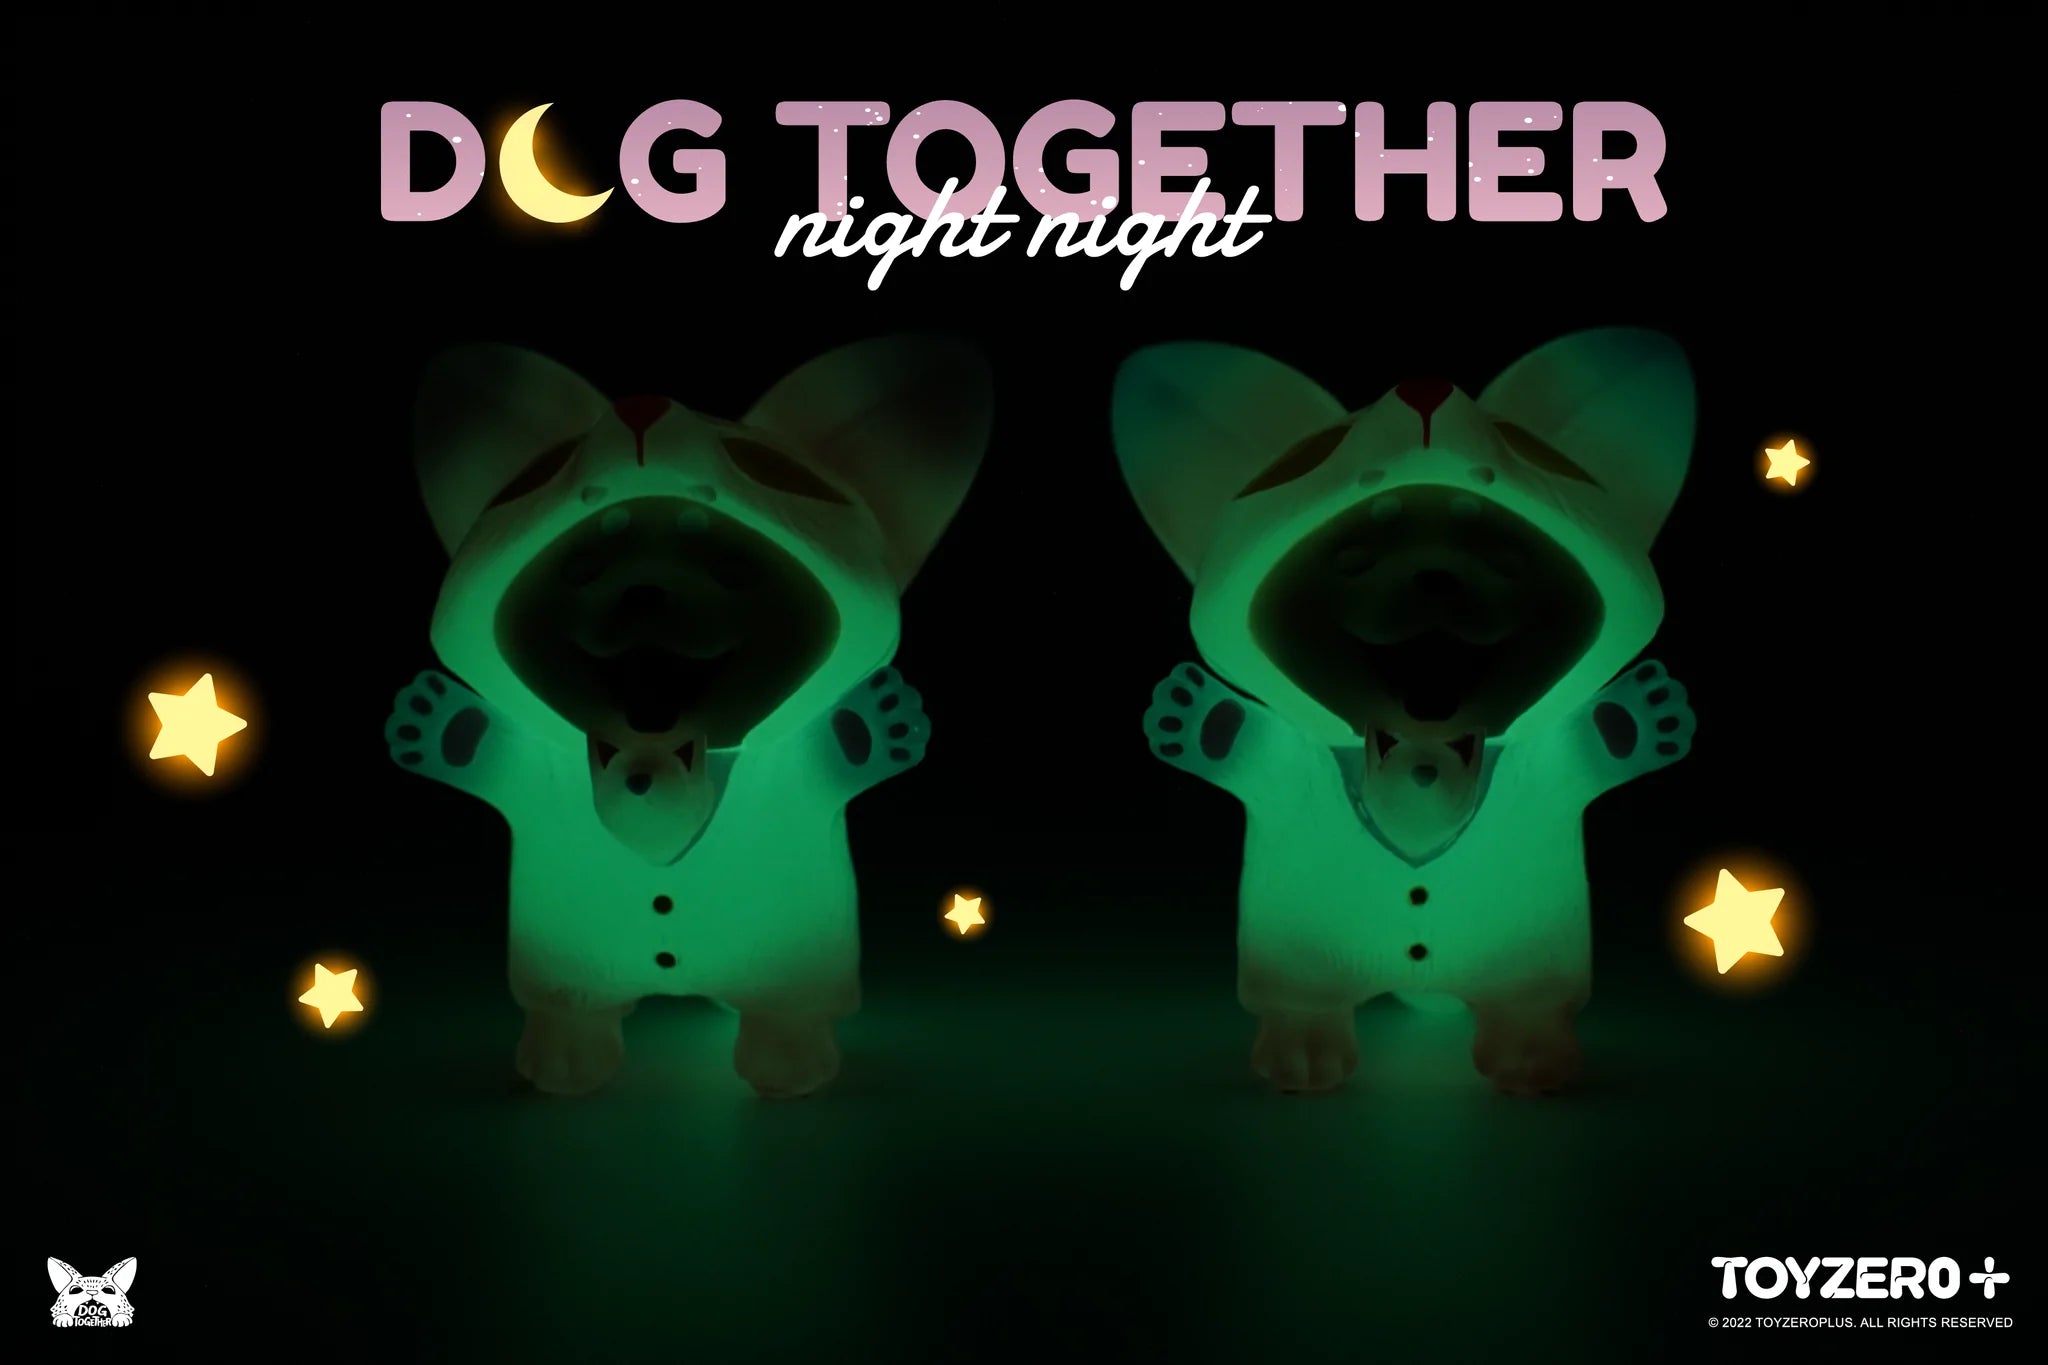 Night Night Dou Dou (Daydream & Good Night Edition) by Dogtogether